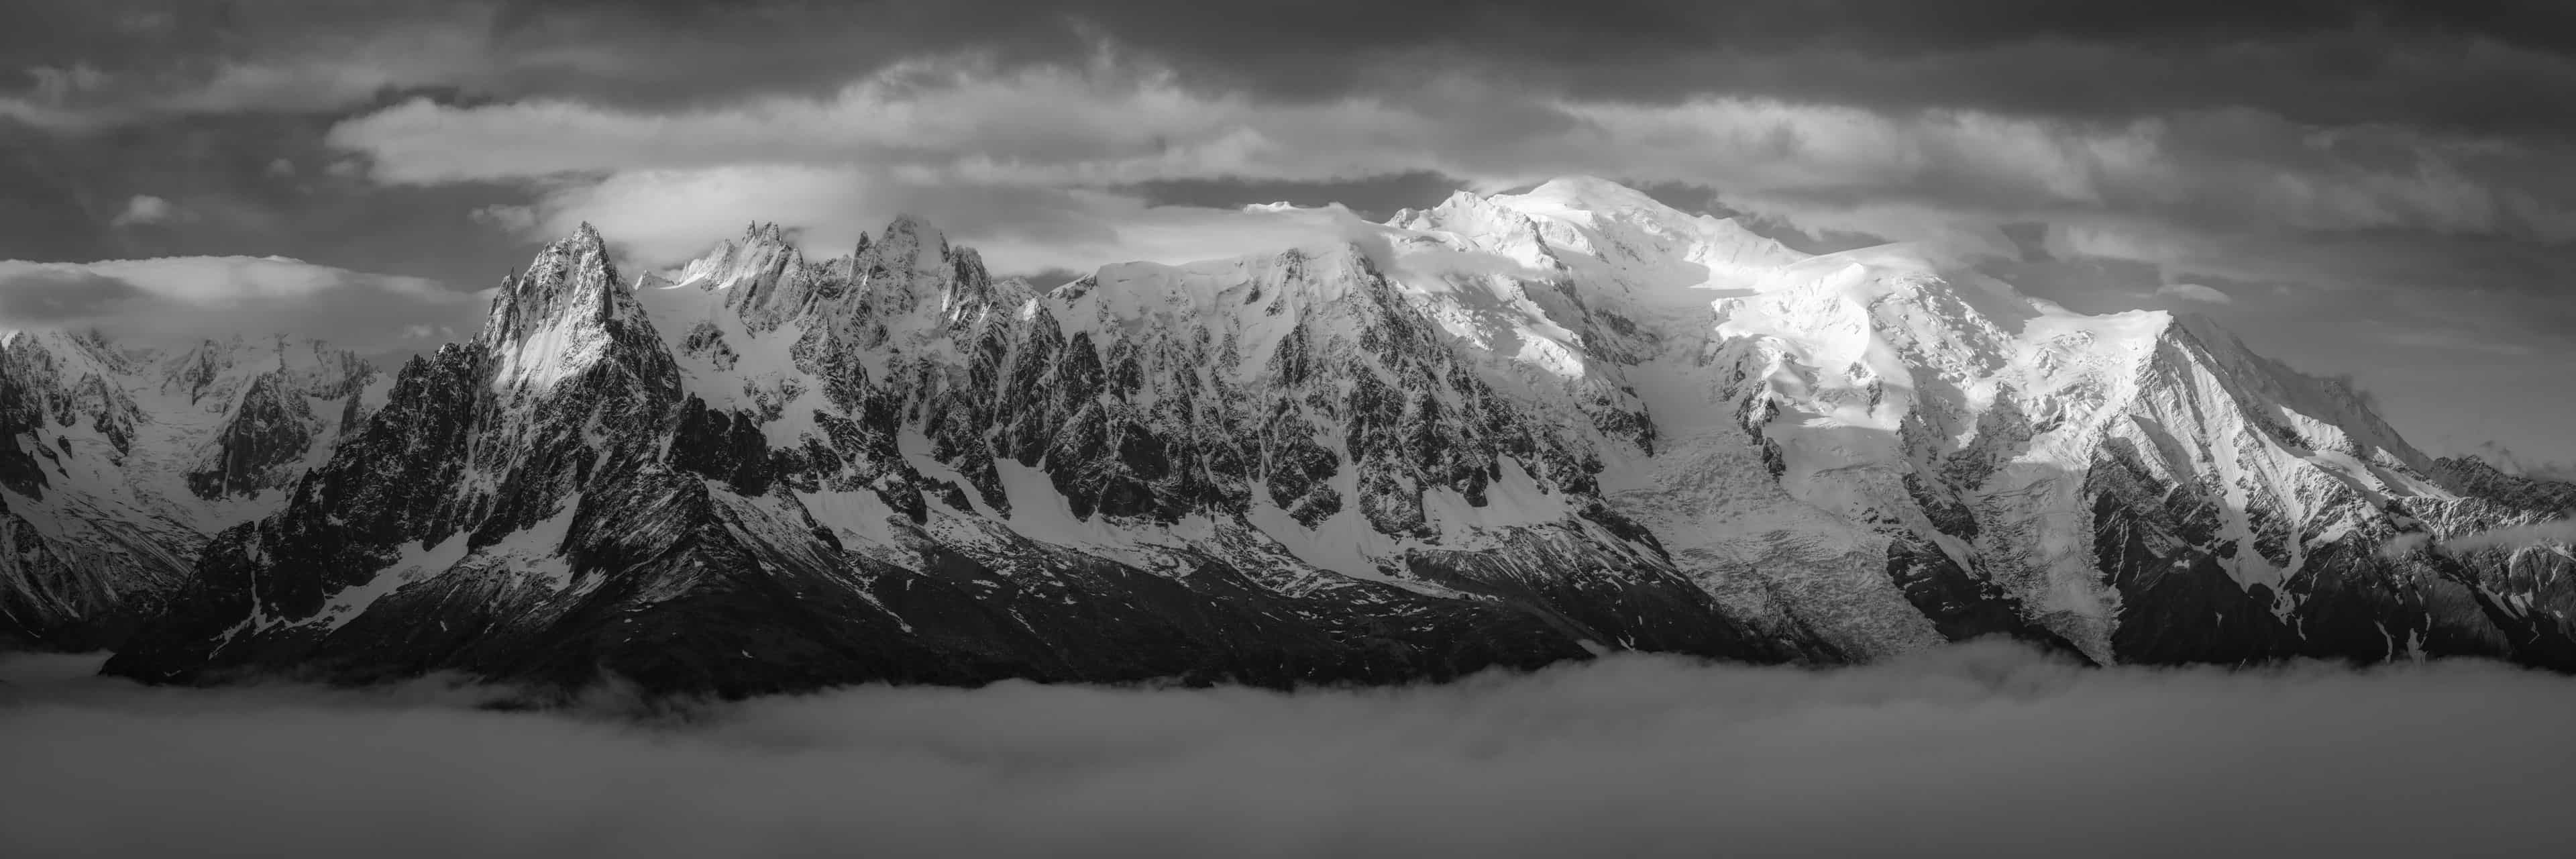 Massif Mont-Blanc-Chamonix - Aiguille de Chamonix